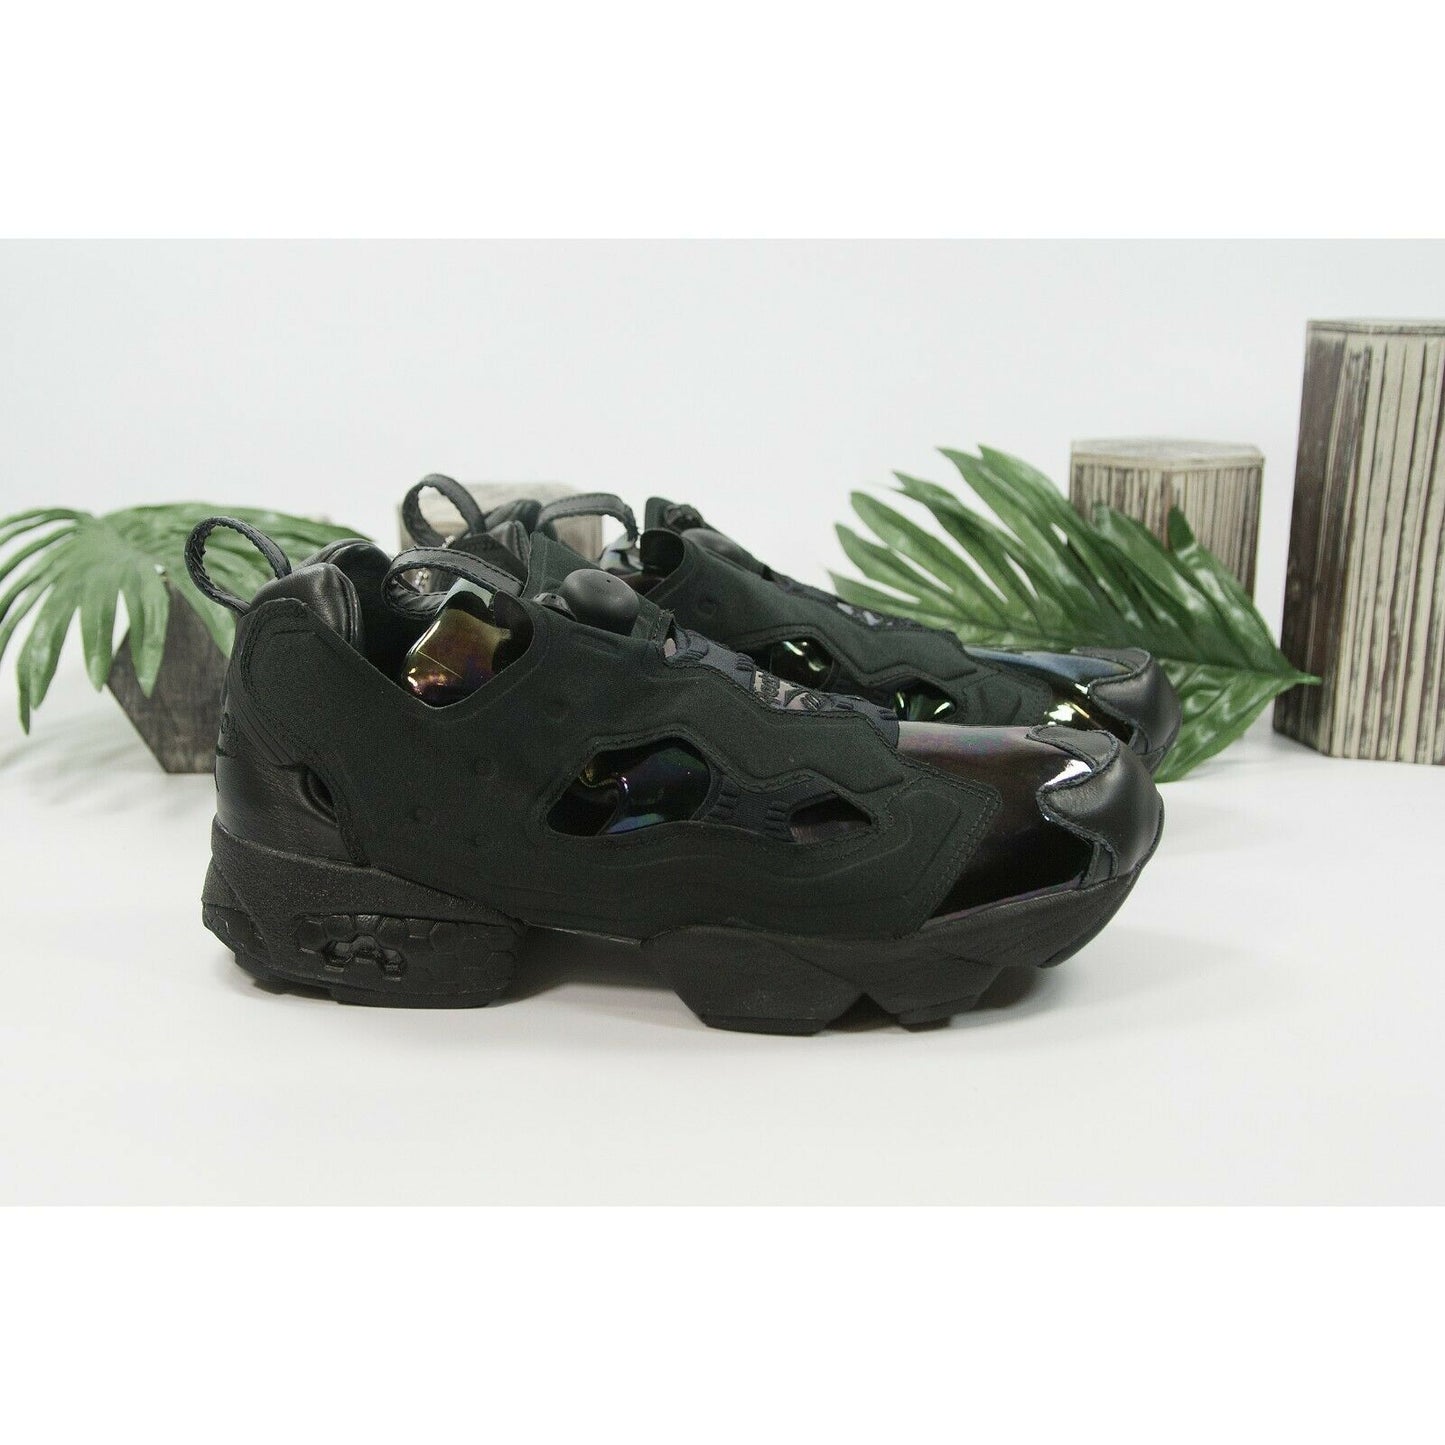 Sandro X Reebok Instapump Fury Black Oil Slick Iridescent Sneaker Shoes Size 10